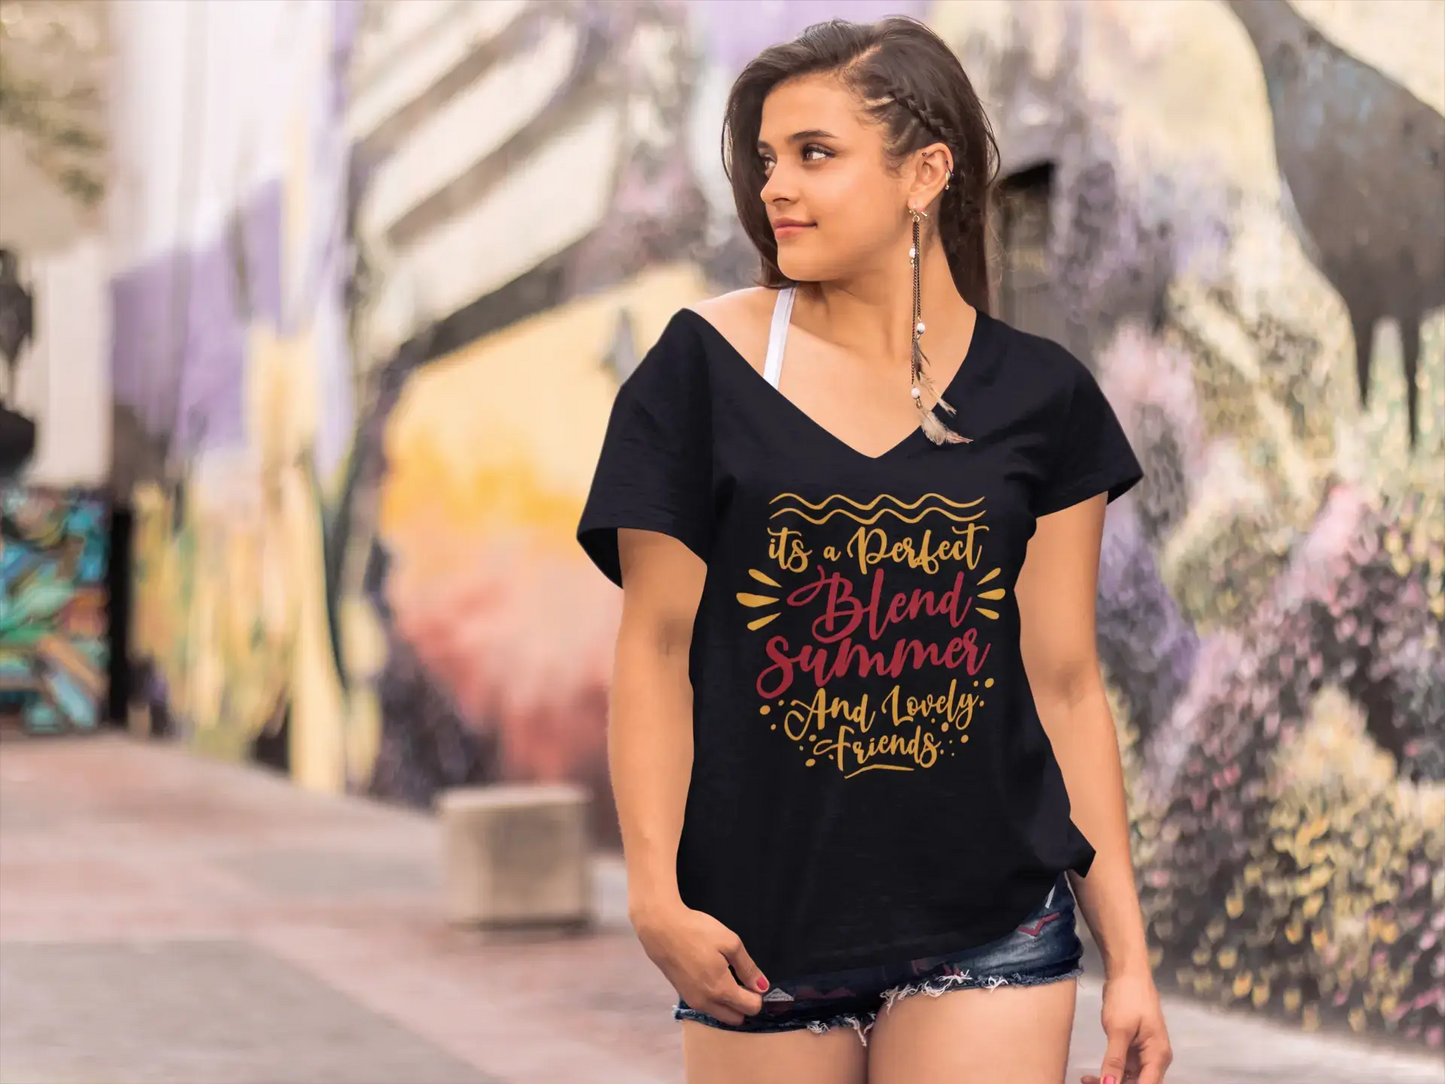 ULTRABASIC Women's T-Shirt Blend Summer and Lovely Friends - Love Quote Shirt